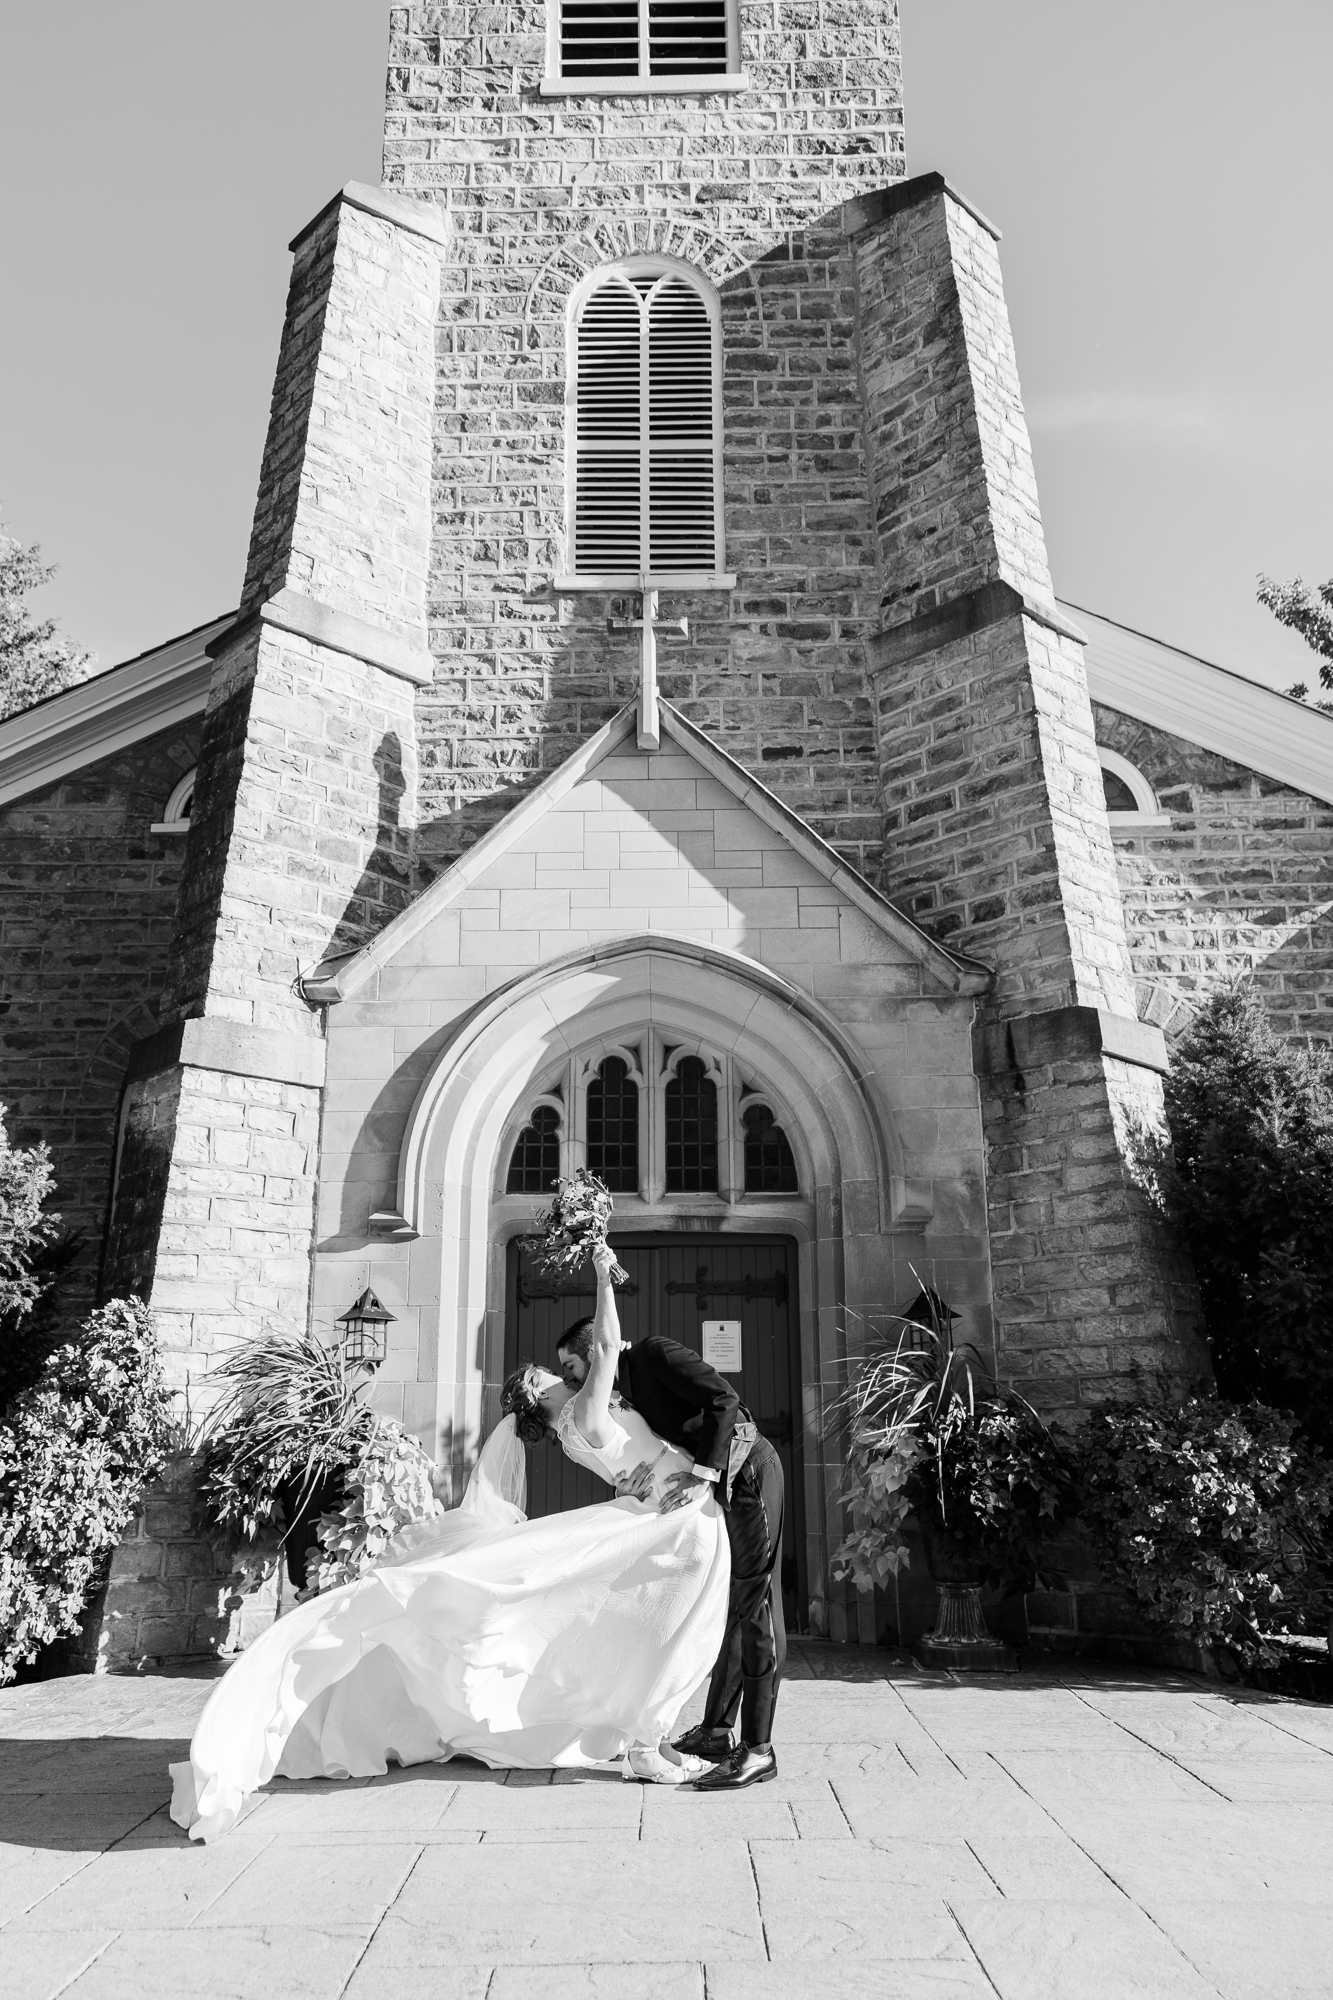 Cute Gate House Wedding in Ontario, Canada